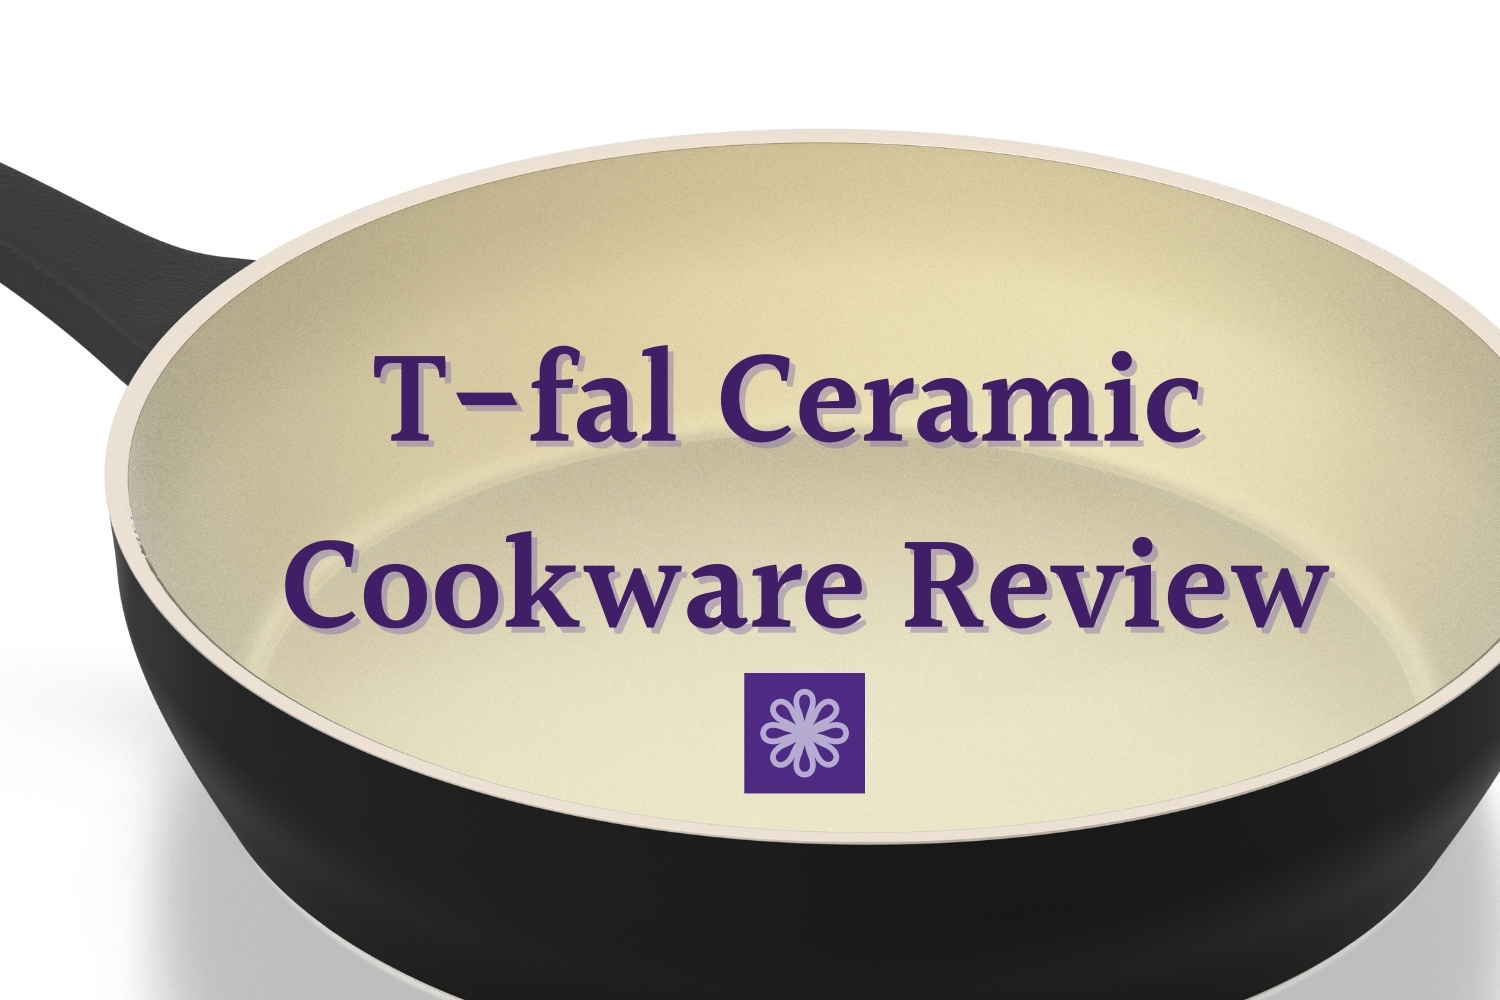 https://clankitchen.com/wp-content/uploads/2020/04/t-fal-ceramic-cookware-review.jpg